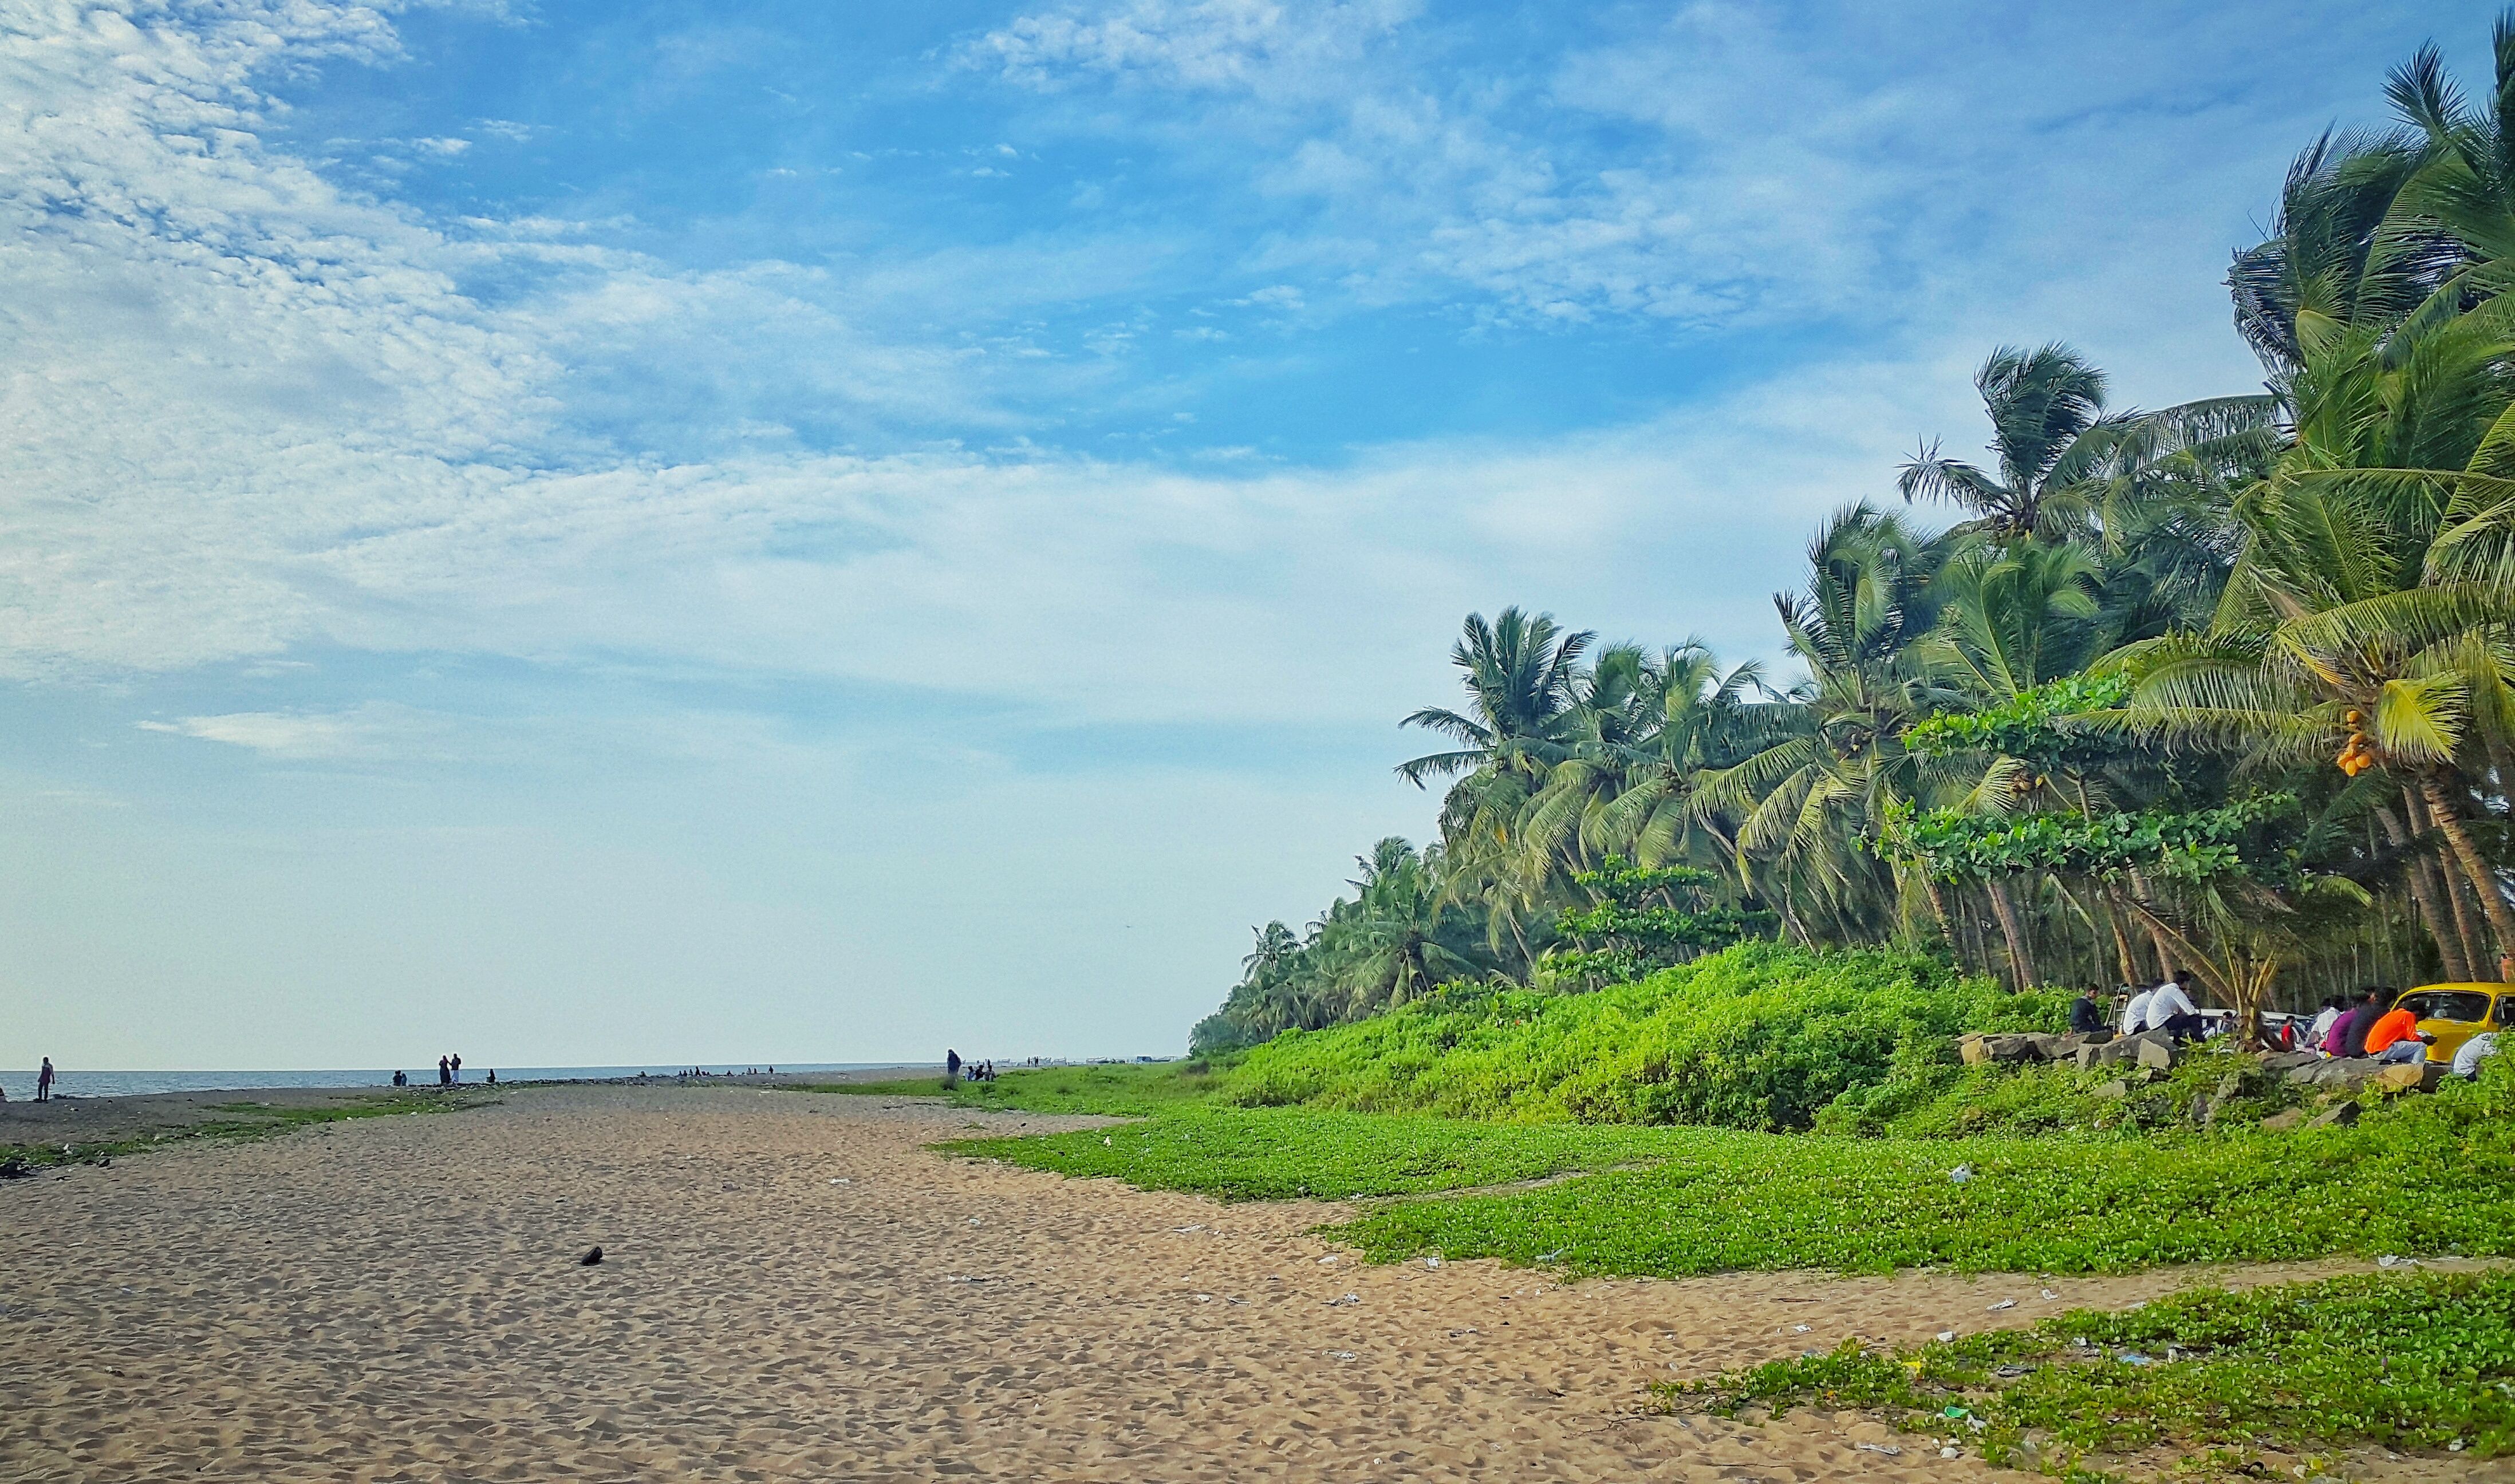 Kerala beach | Landscape | Pinterest | Kerala